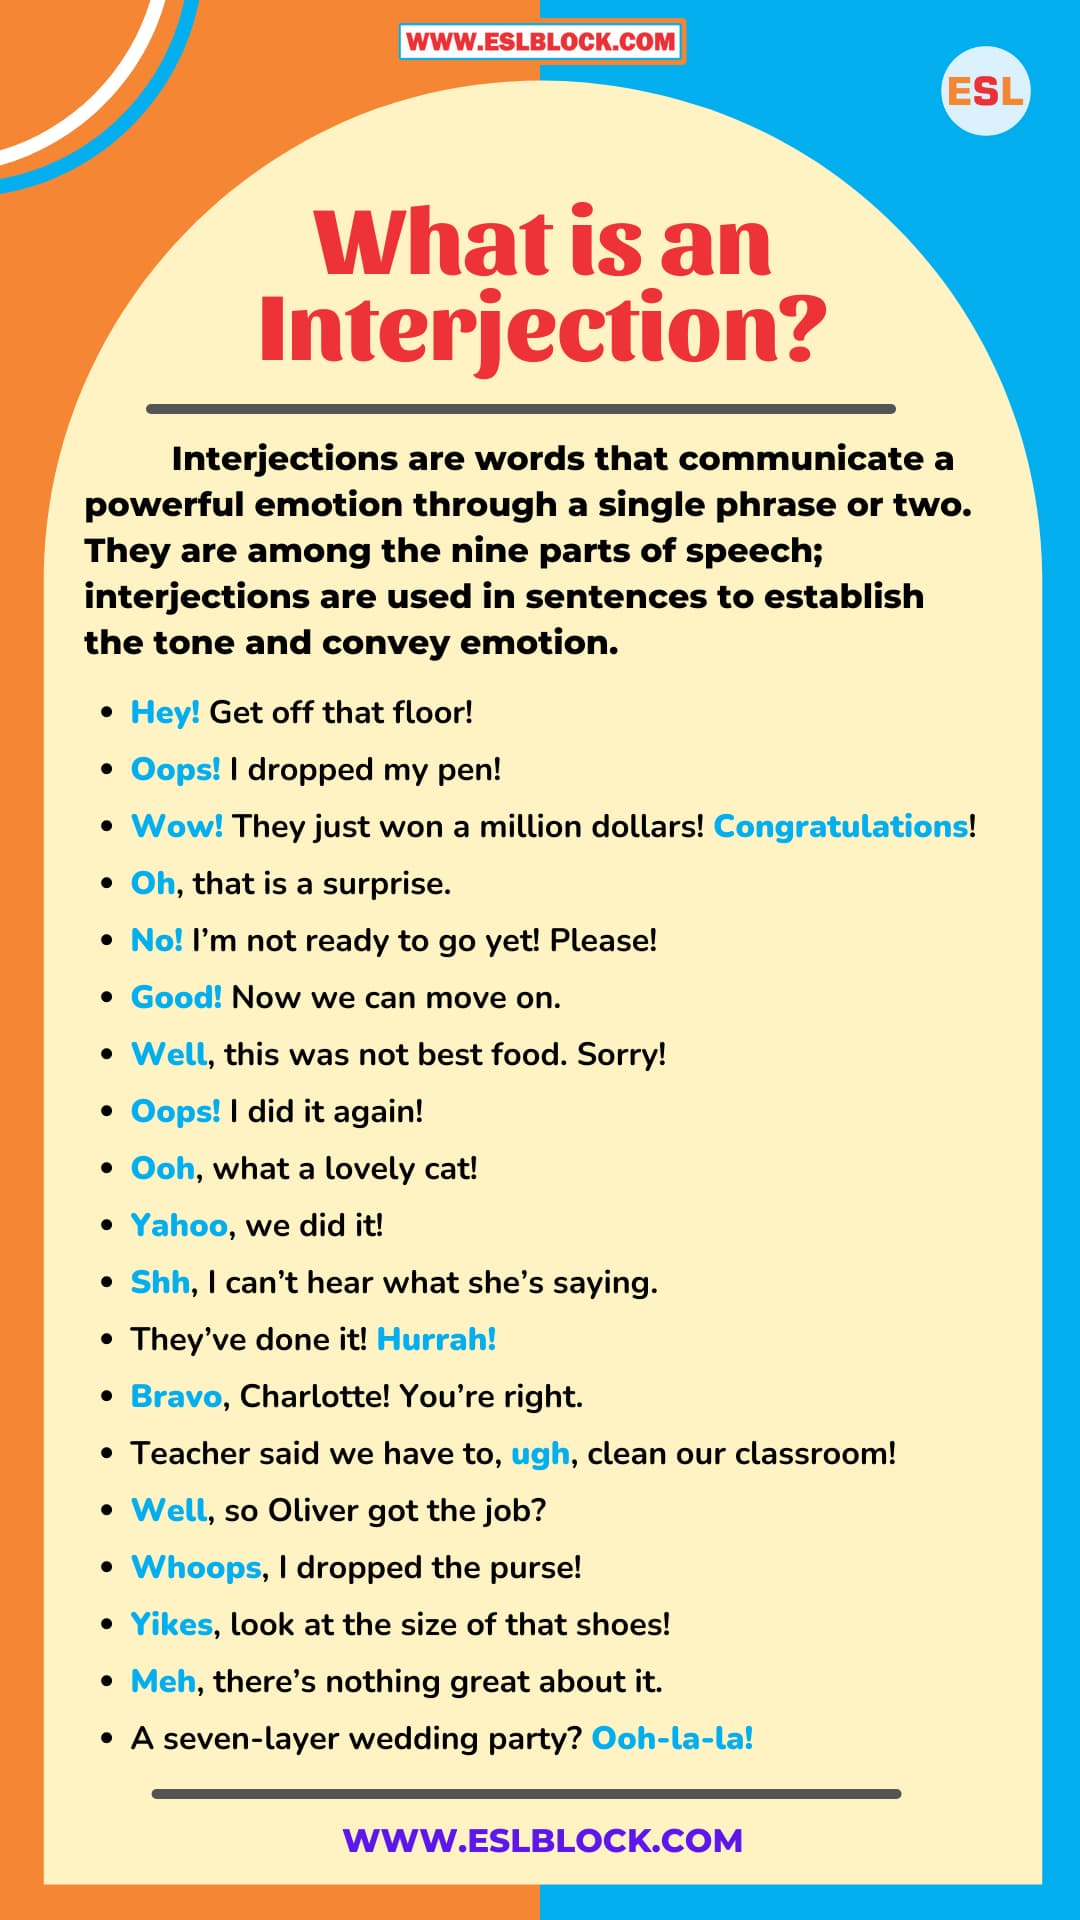 English Grammar, Interjection, Parts of Speech, Parts of Speech in English Grammar, What is an Interjection